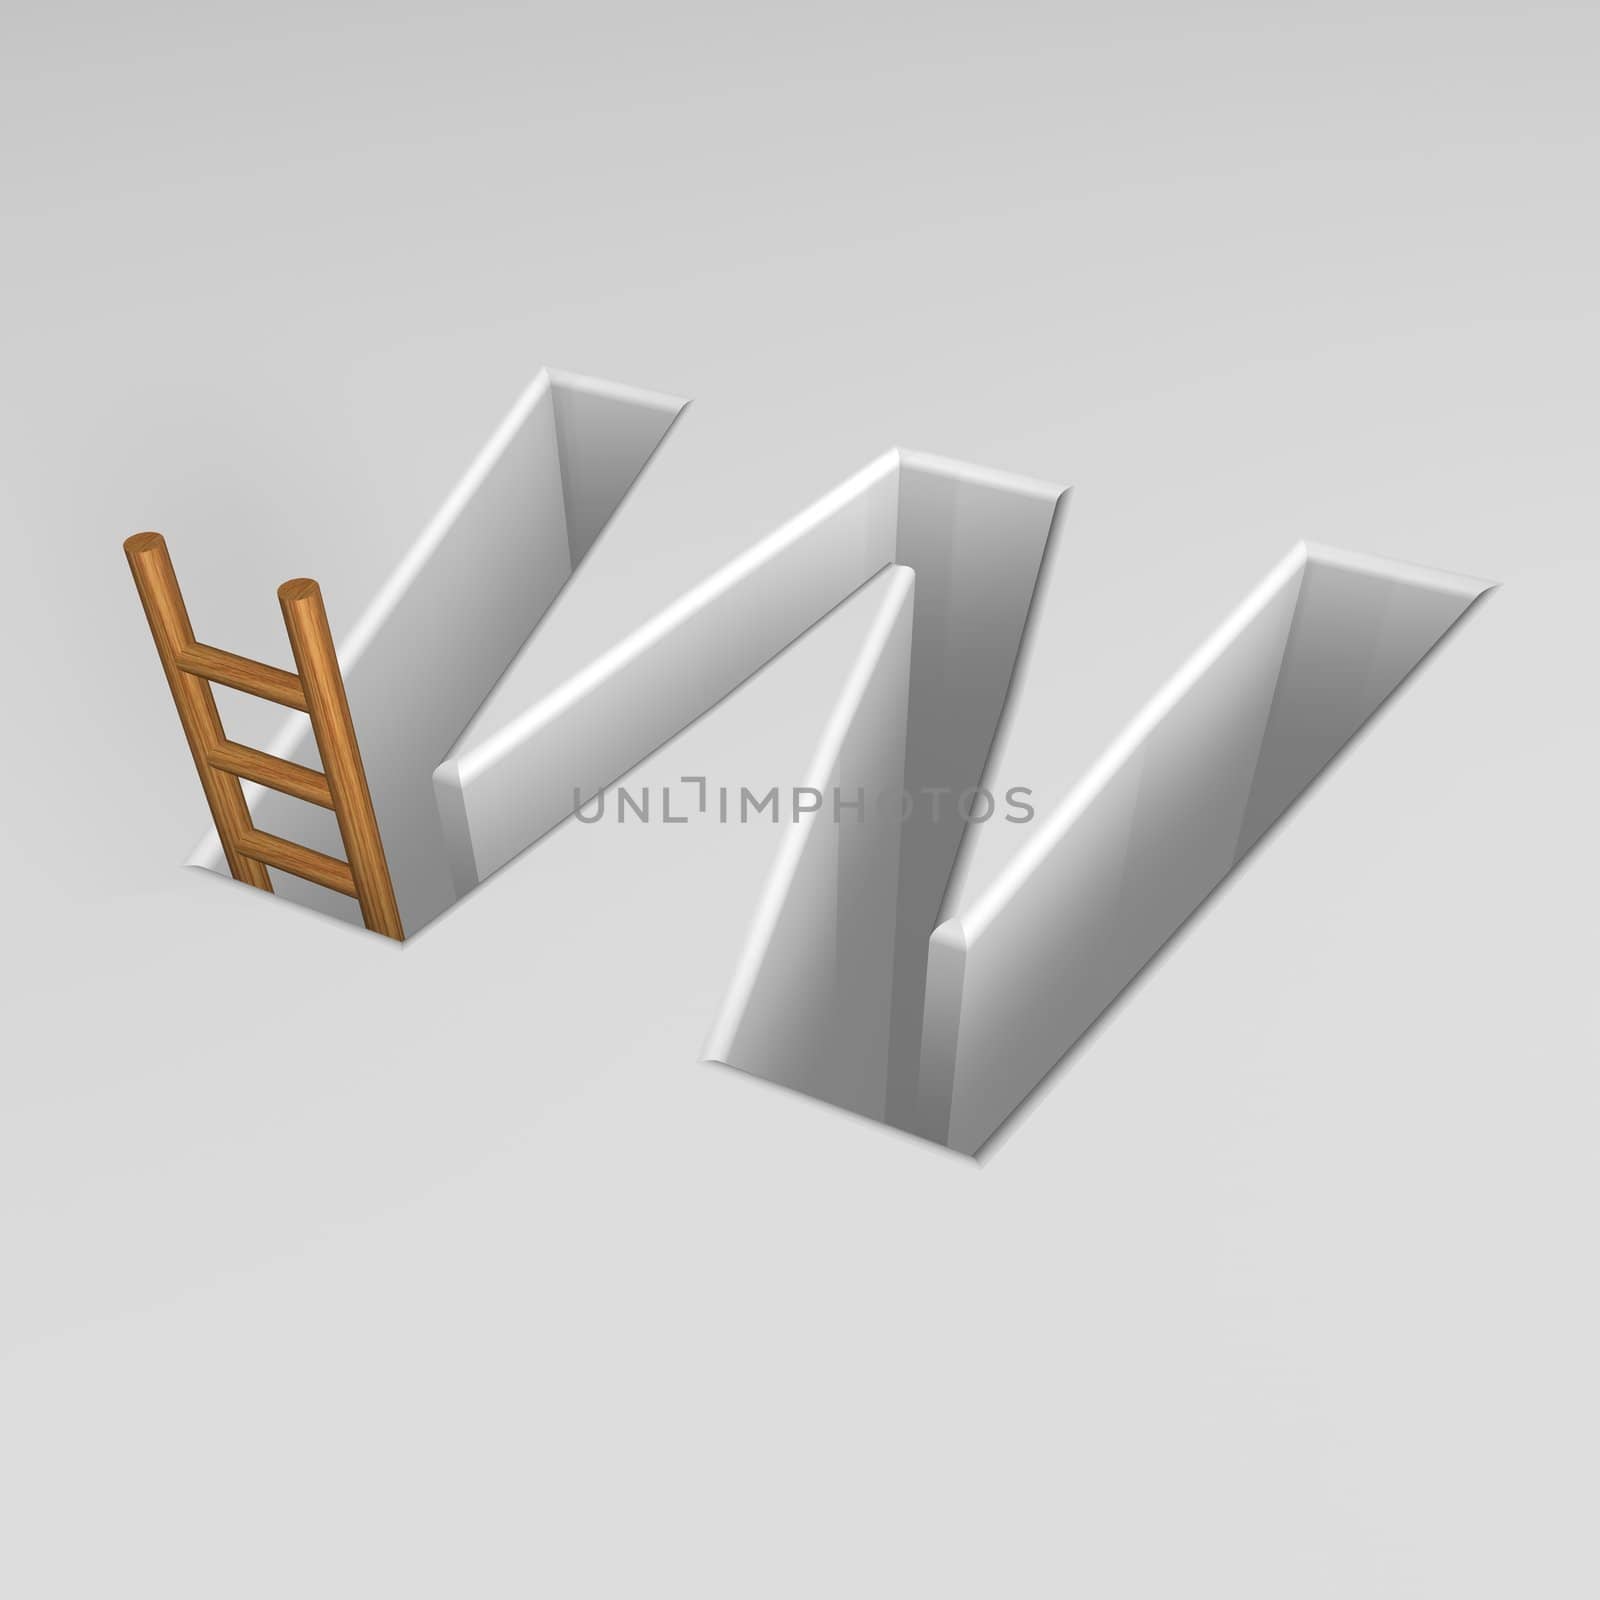 uppercase letter w shape hole with ladder - 3d illustration